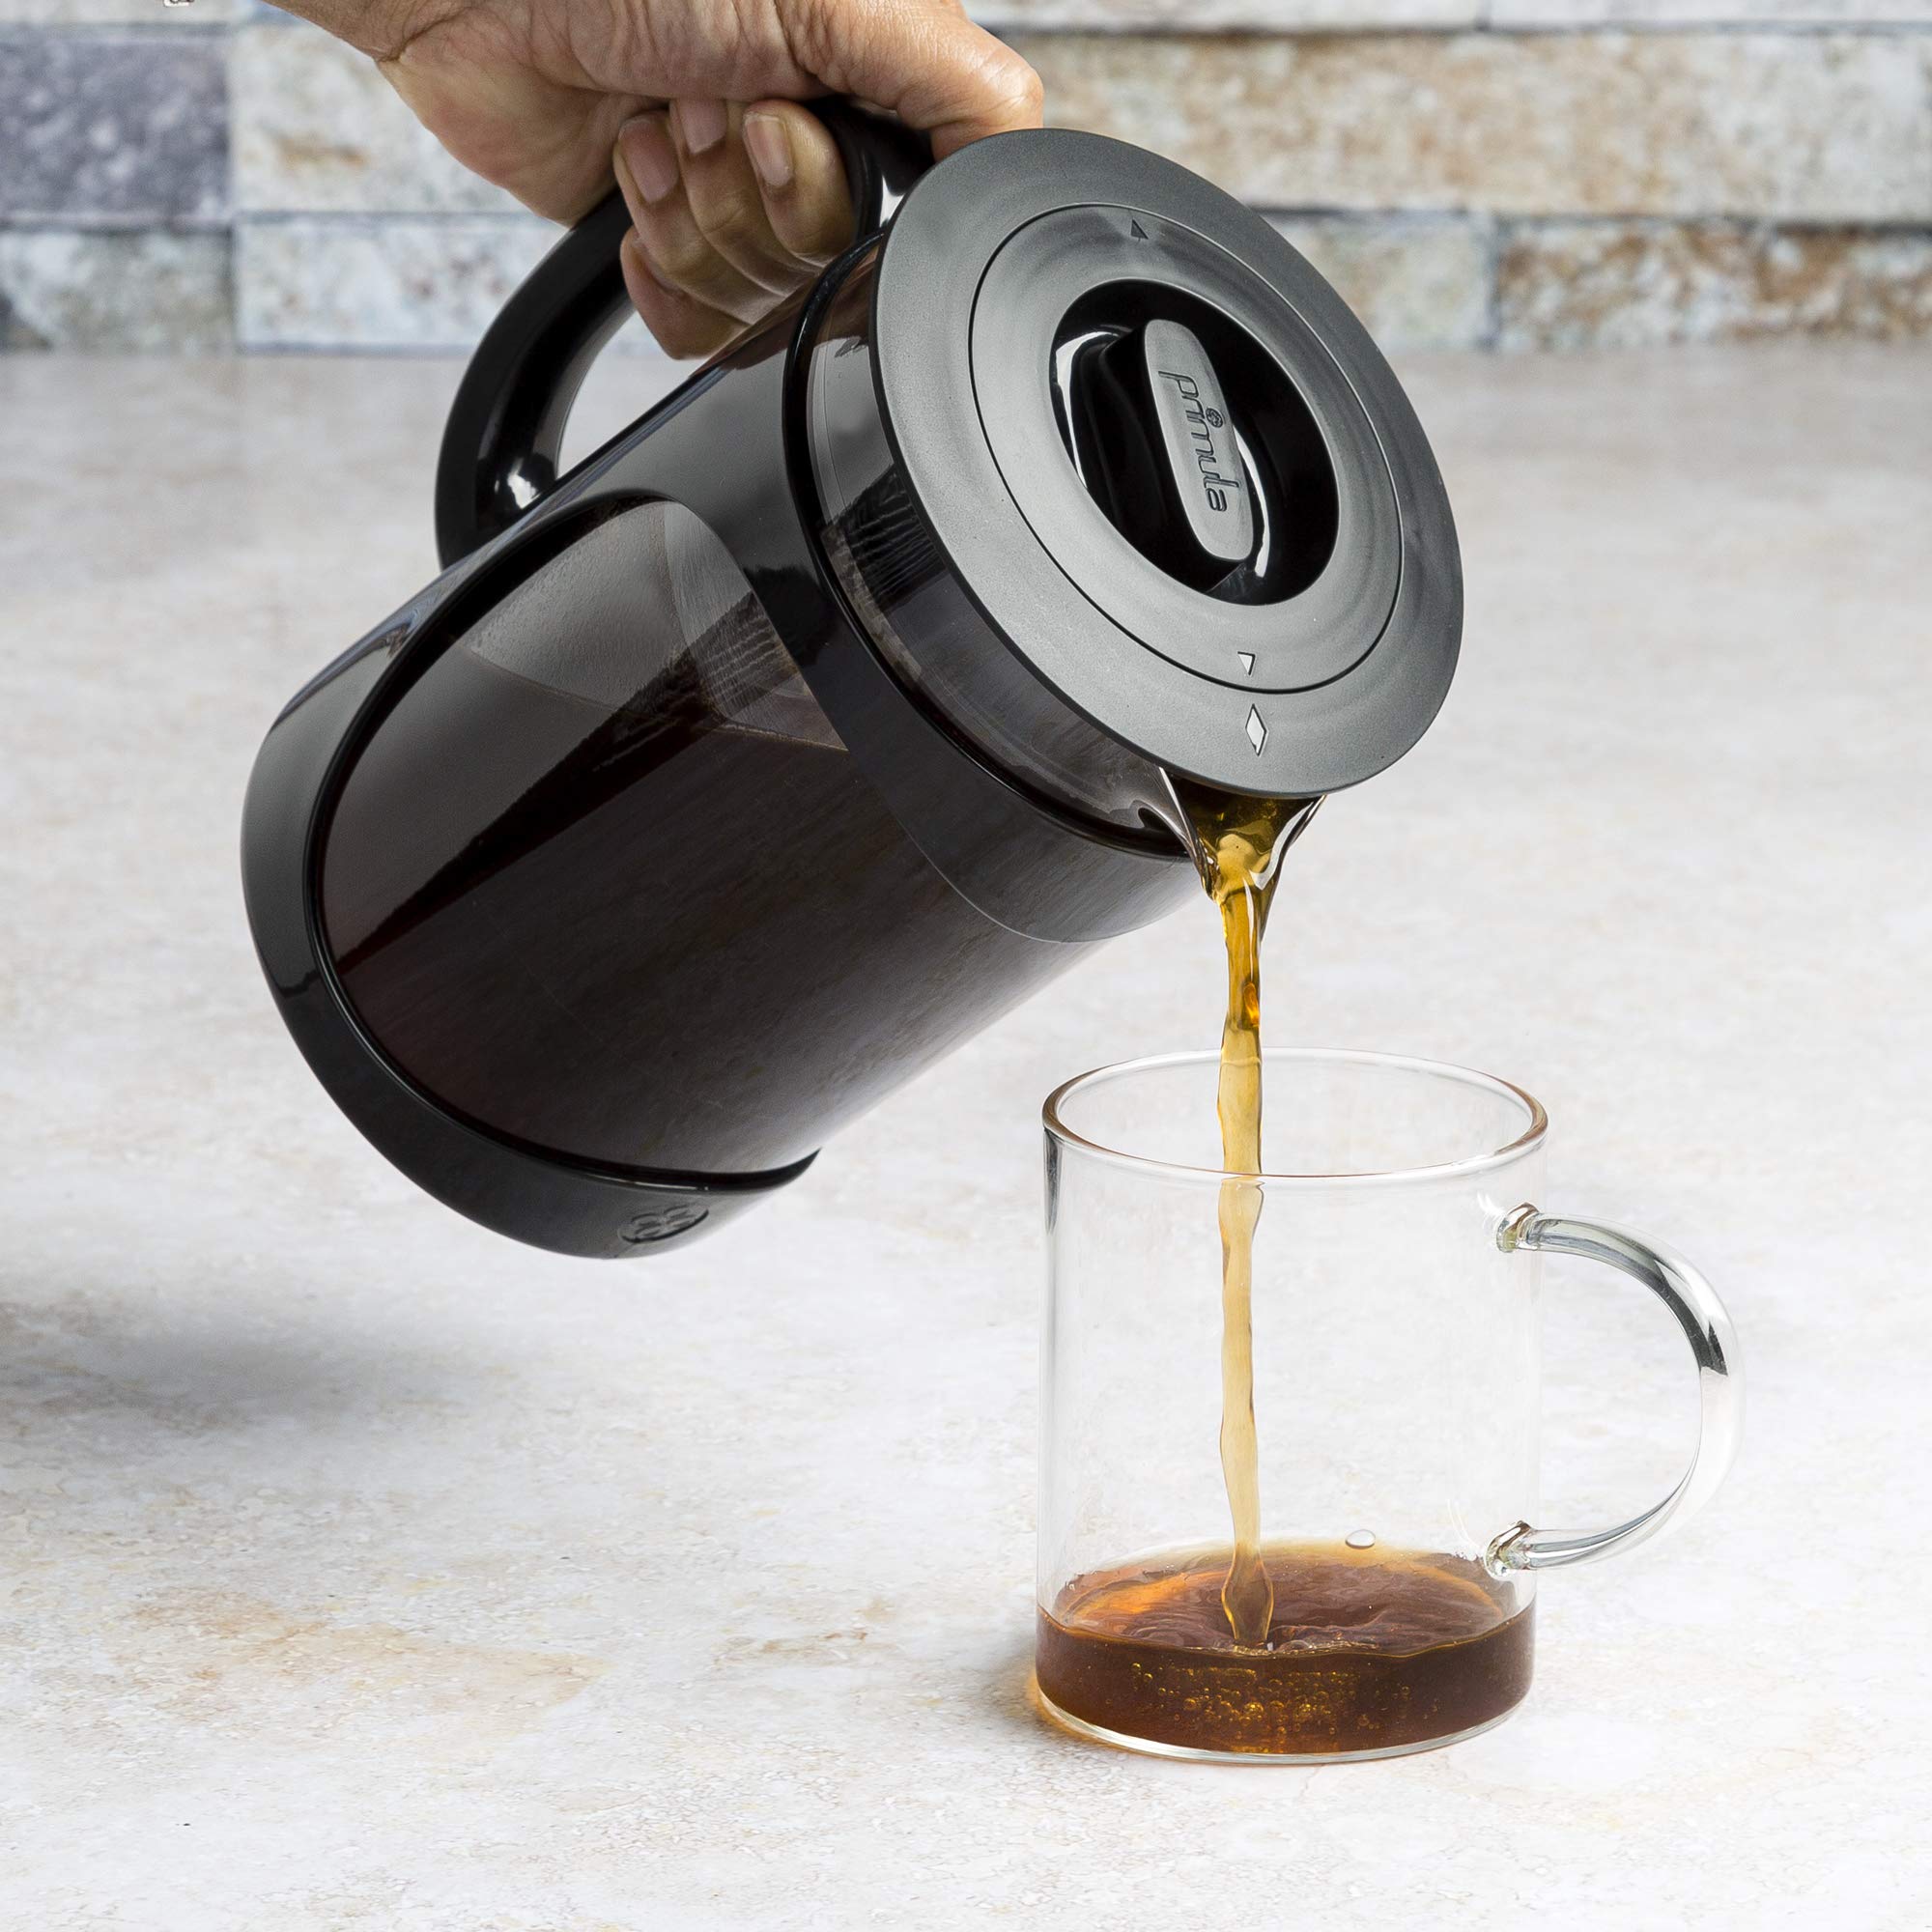 Primula Burke Cold Brew Iced Coffee Maker Durable glass 1.6 Qt NEW